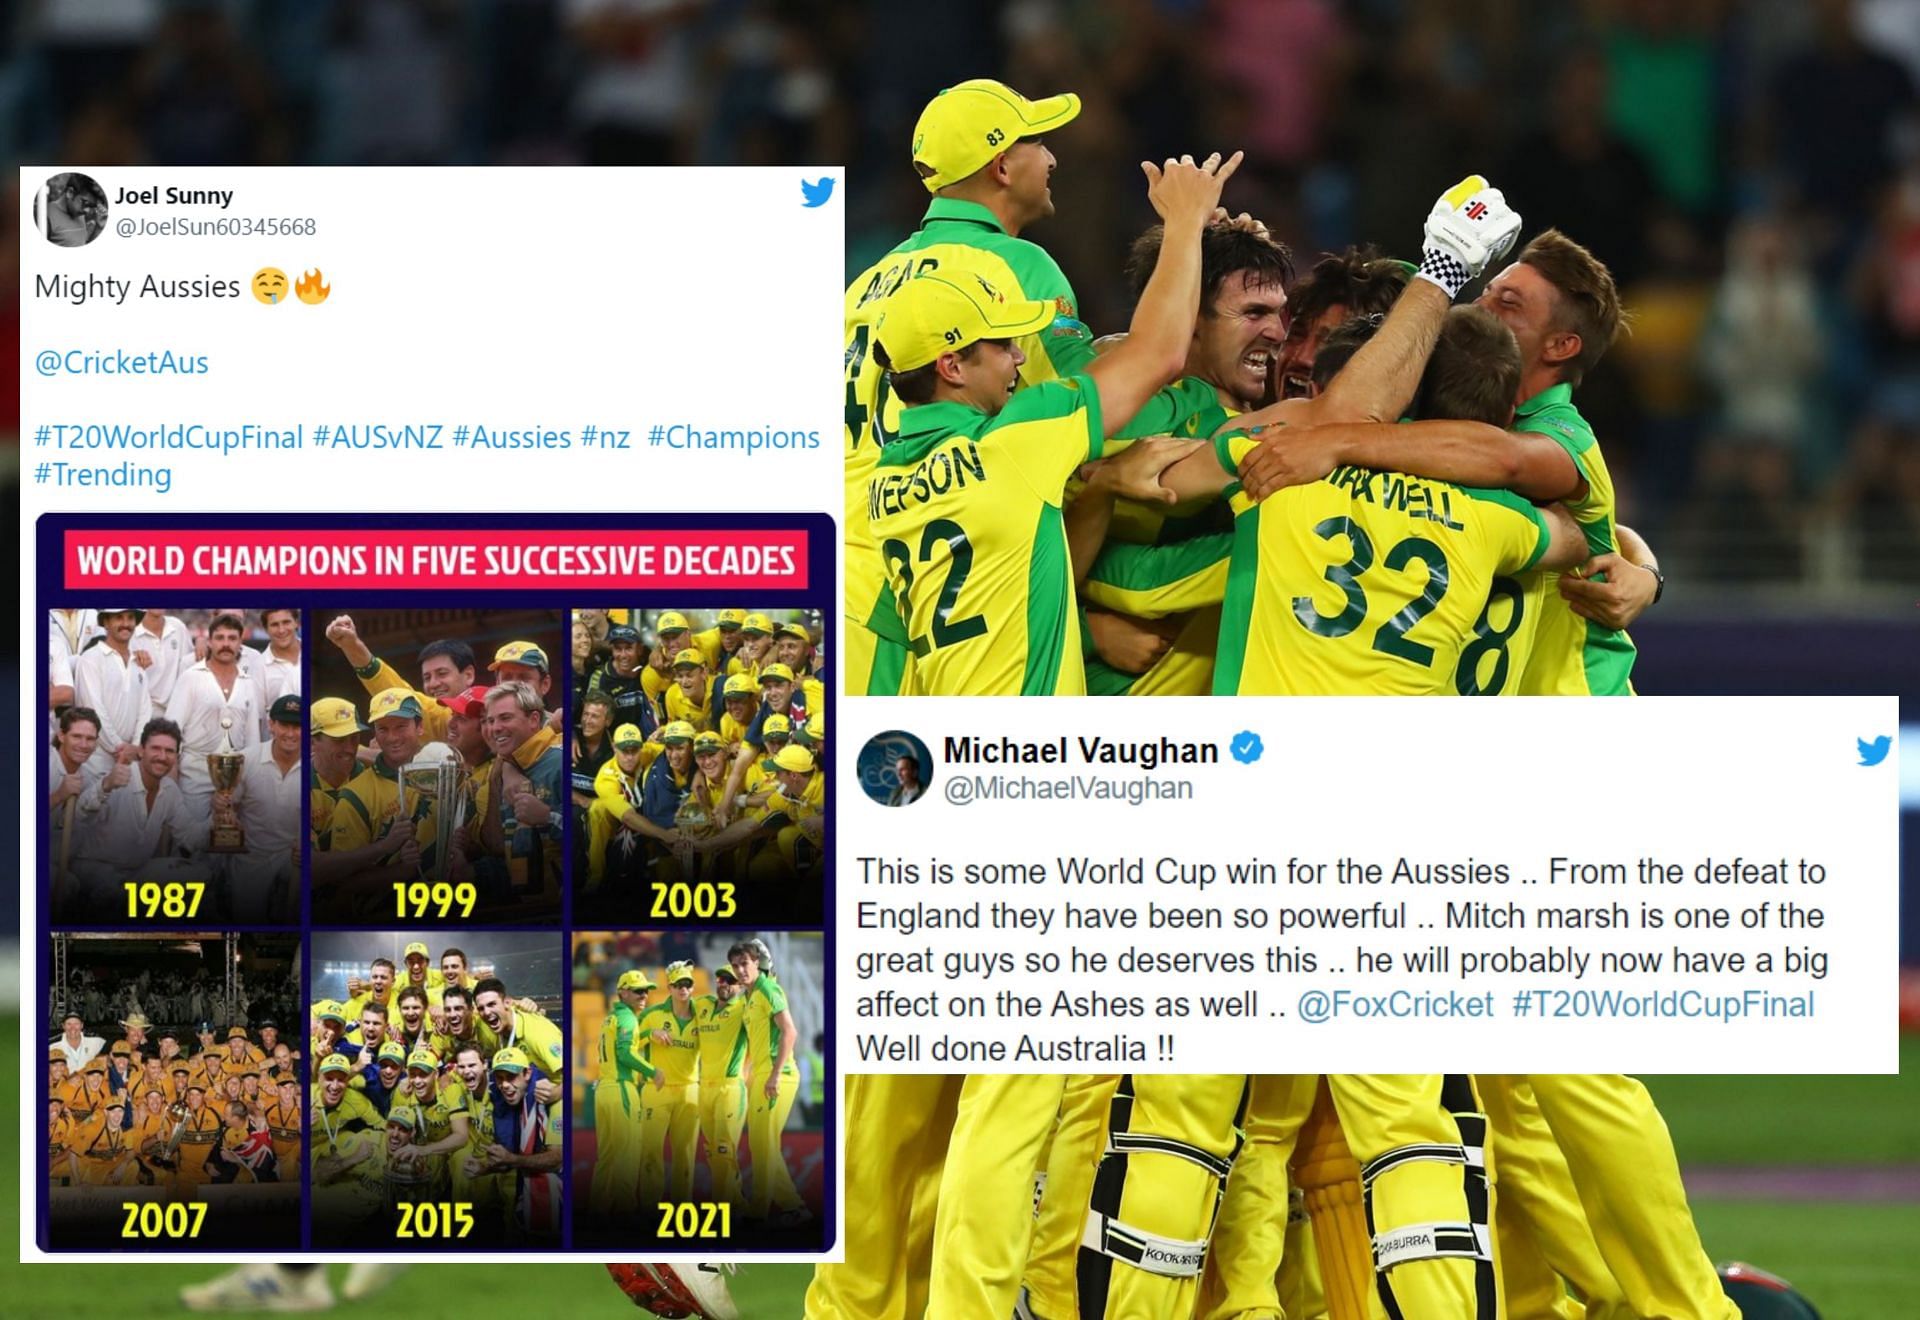 Twitter erupts as Australia wins their first T20 World Cup